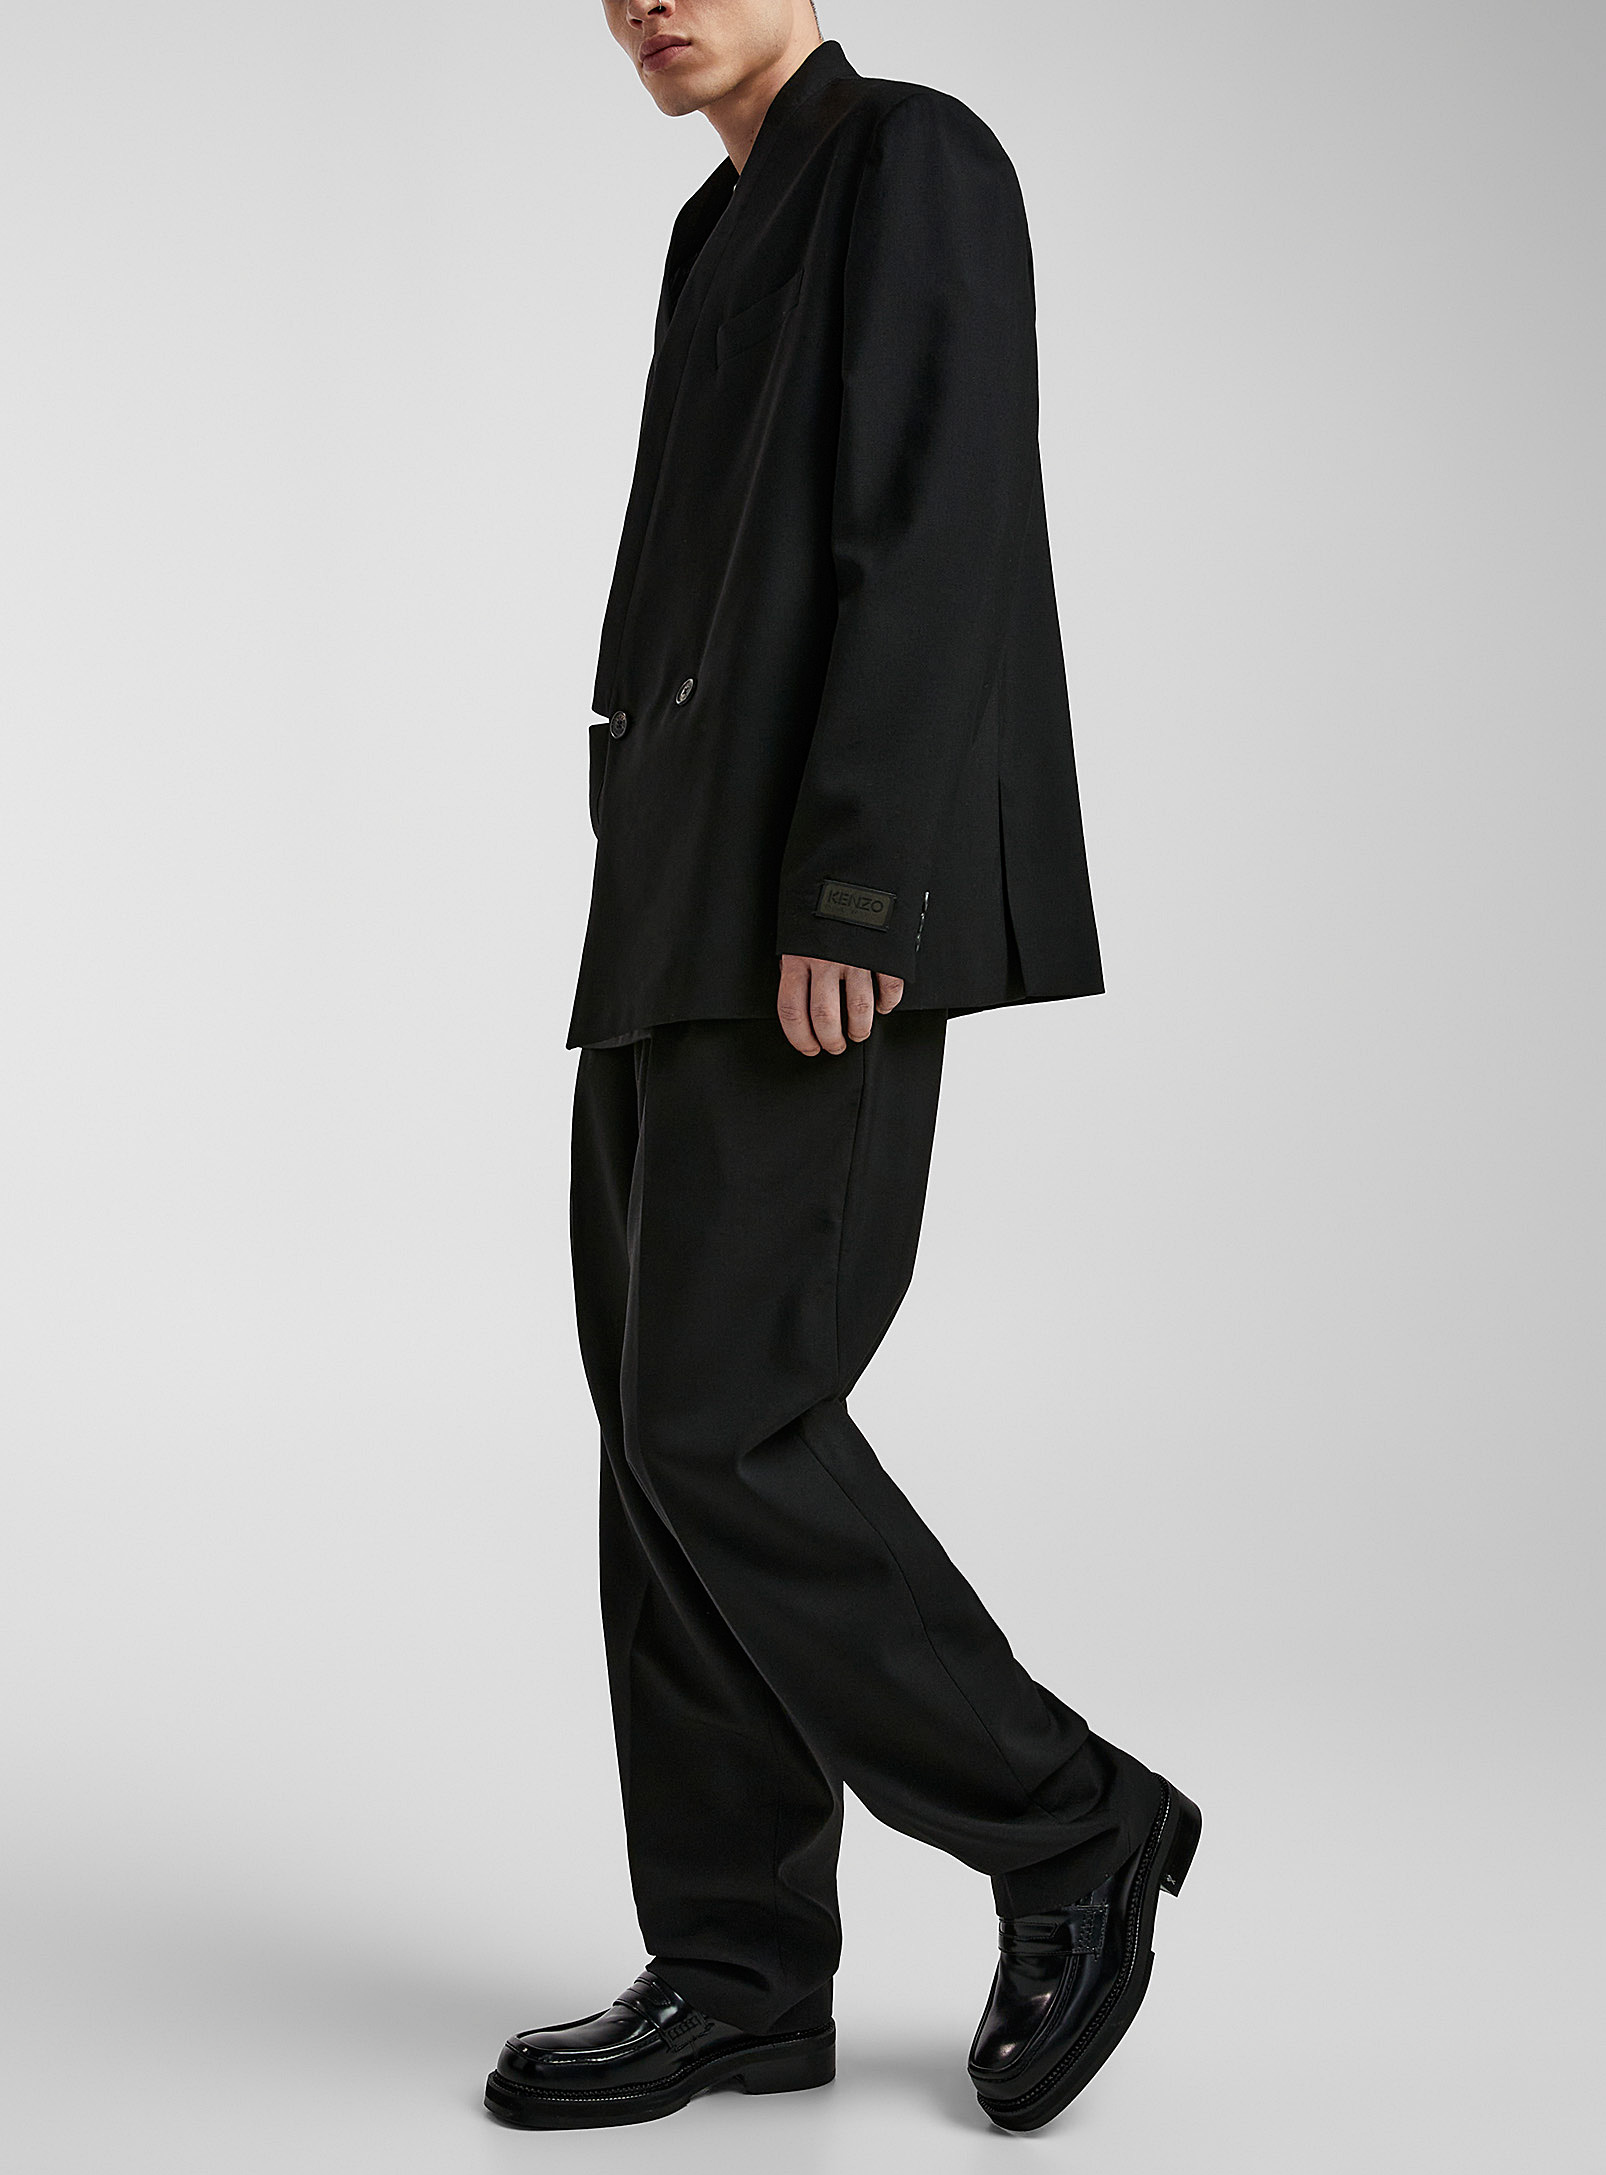 Kenzo Pleated Dress Pant In Black